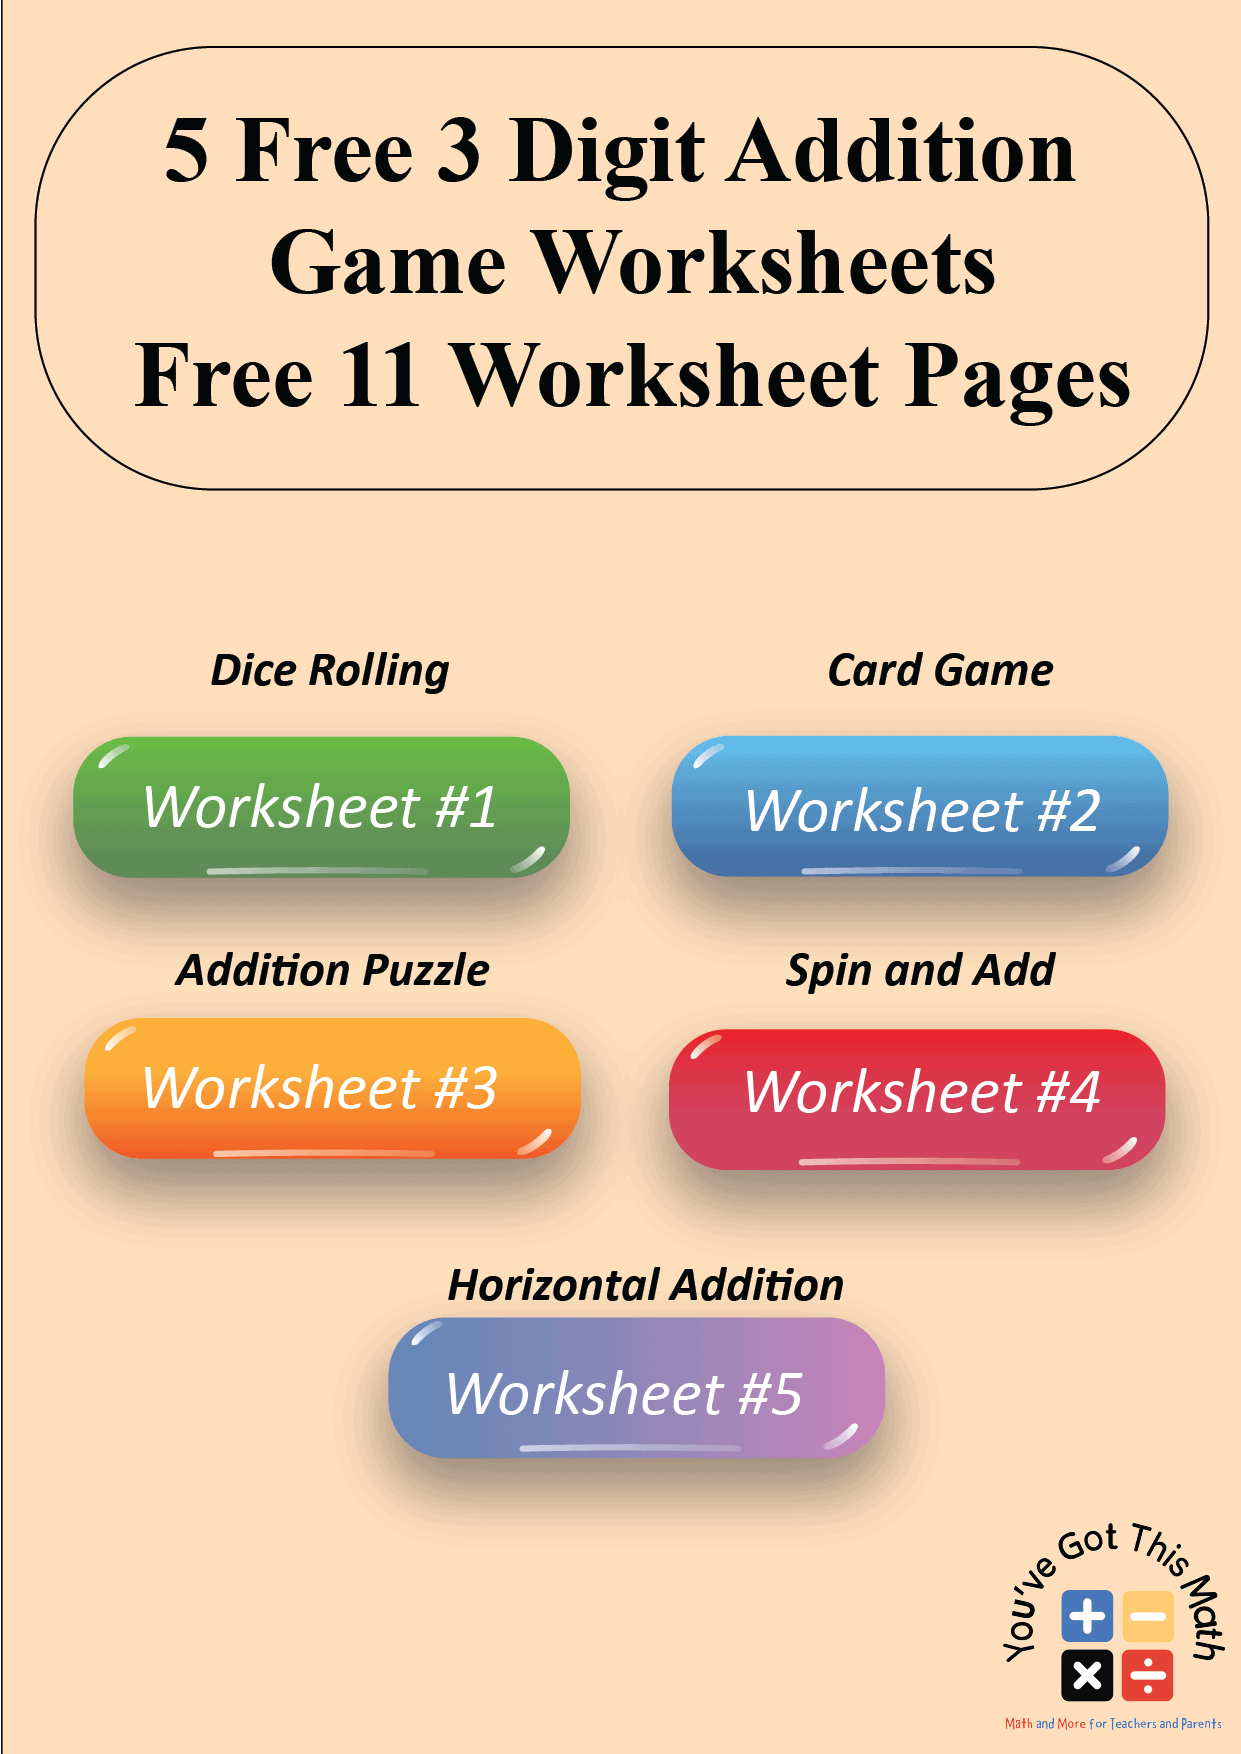 5 Free 3 Digit Addition Game Worksheets